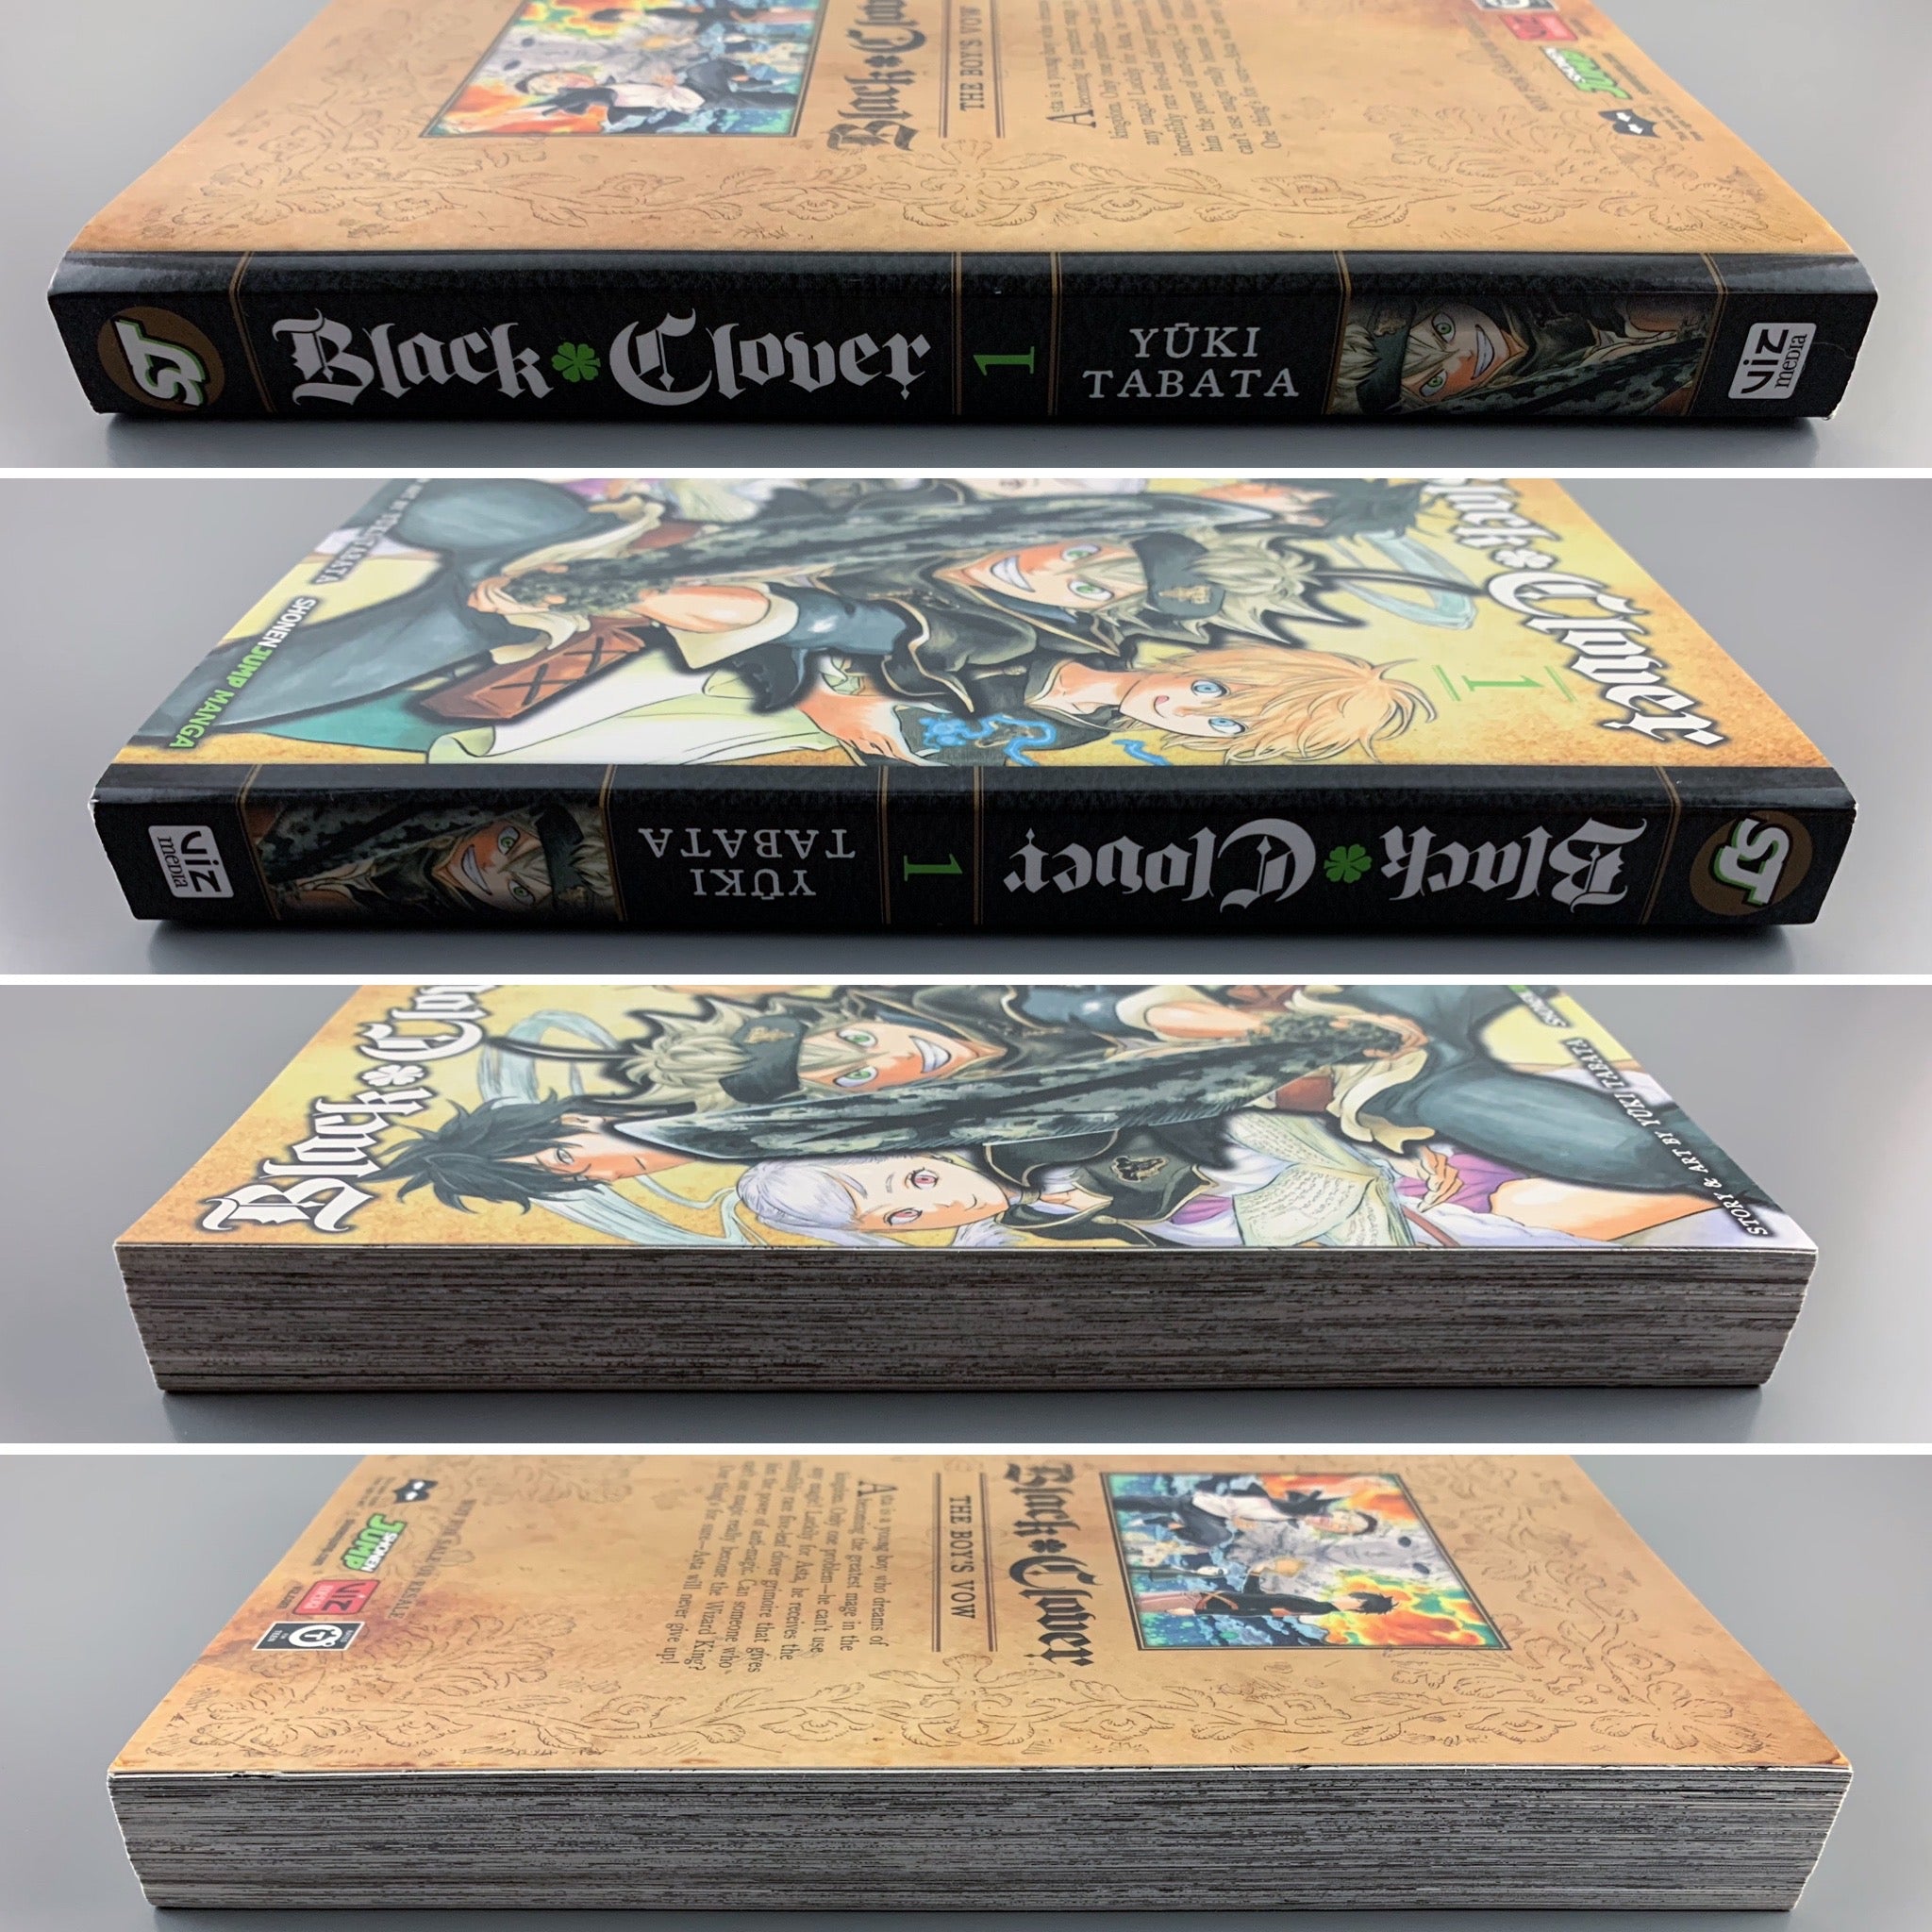 Clockwork Planet Vol 1 Manga English Loot Crate Exclusive